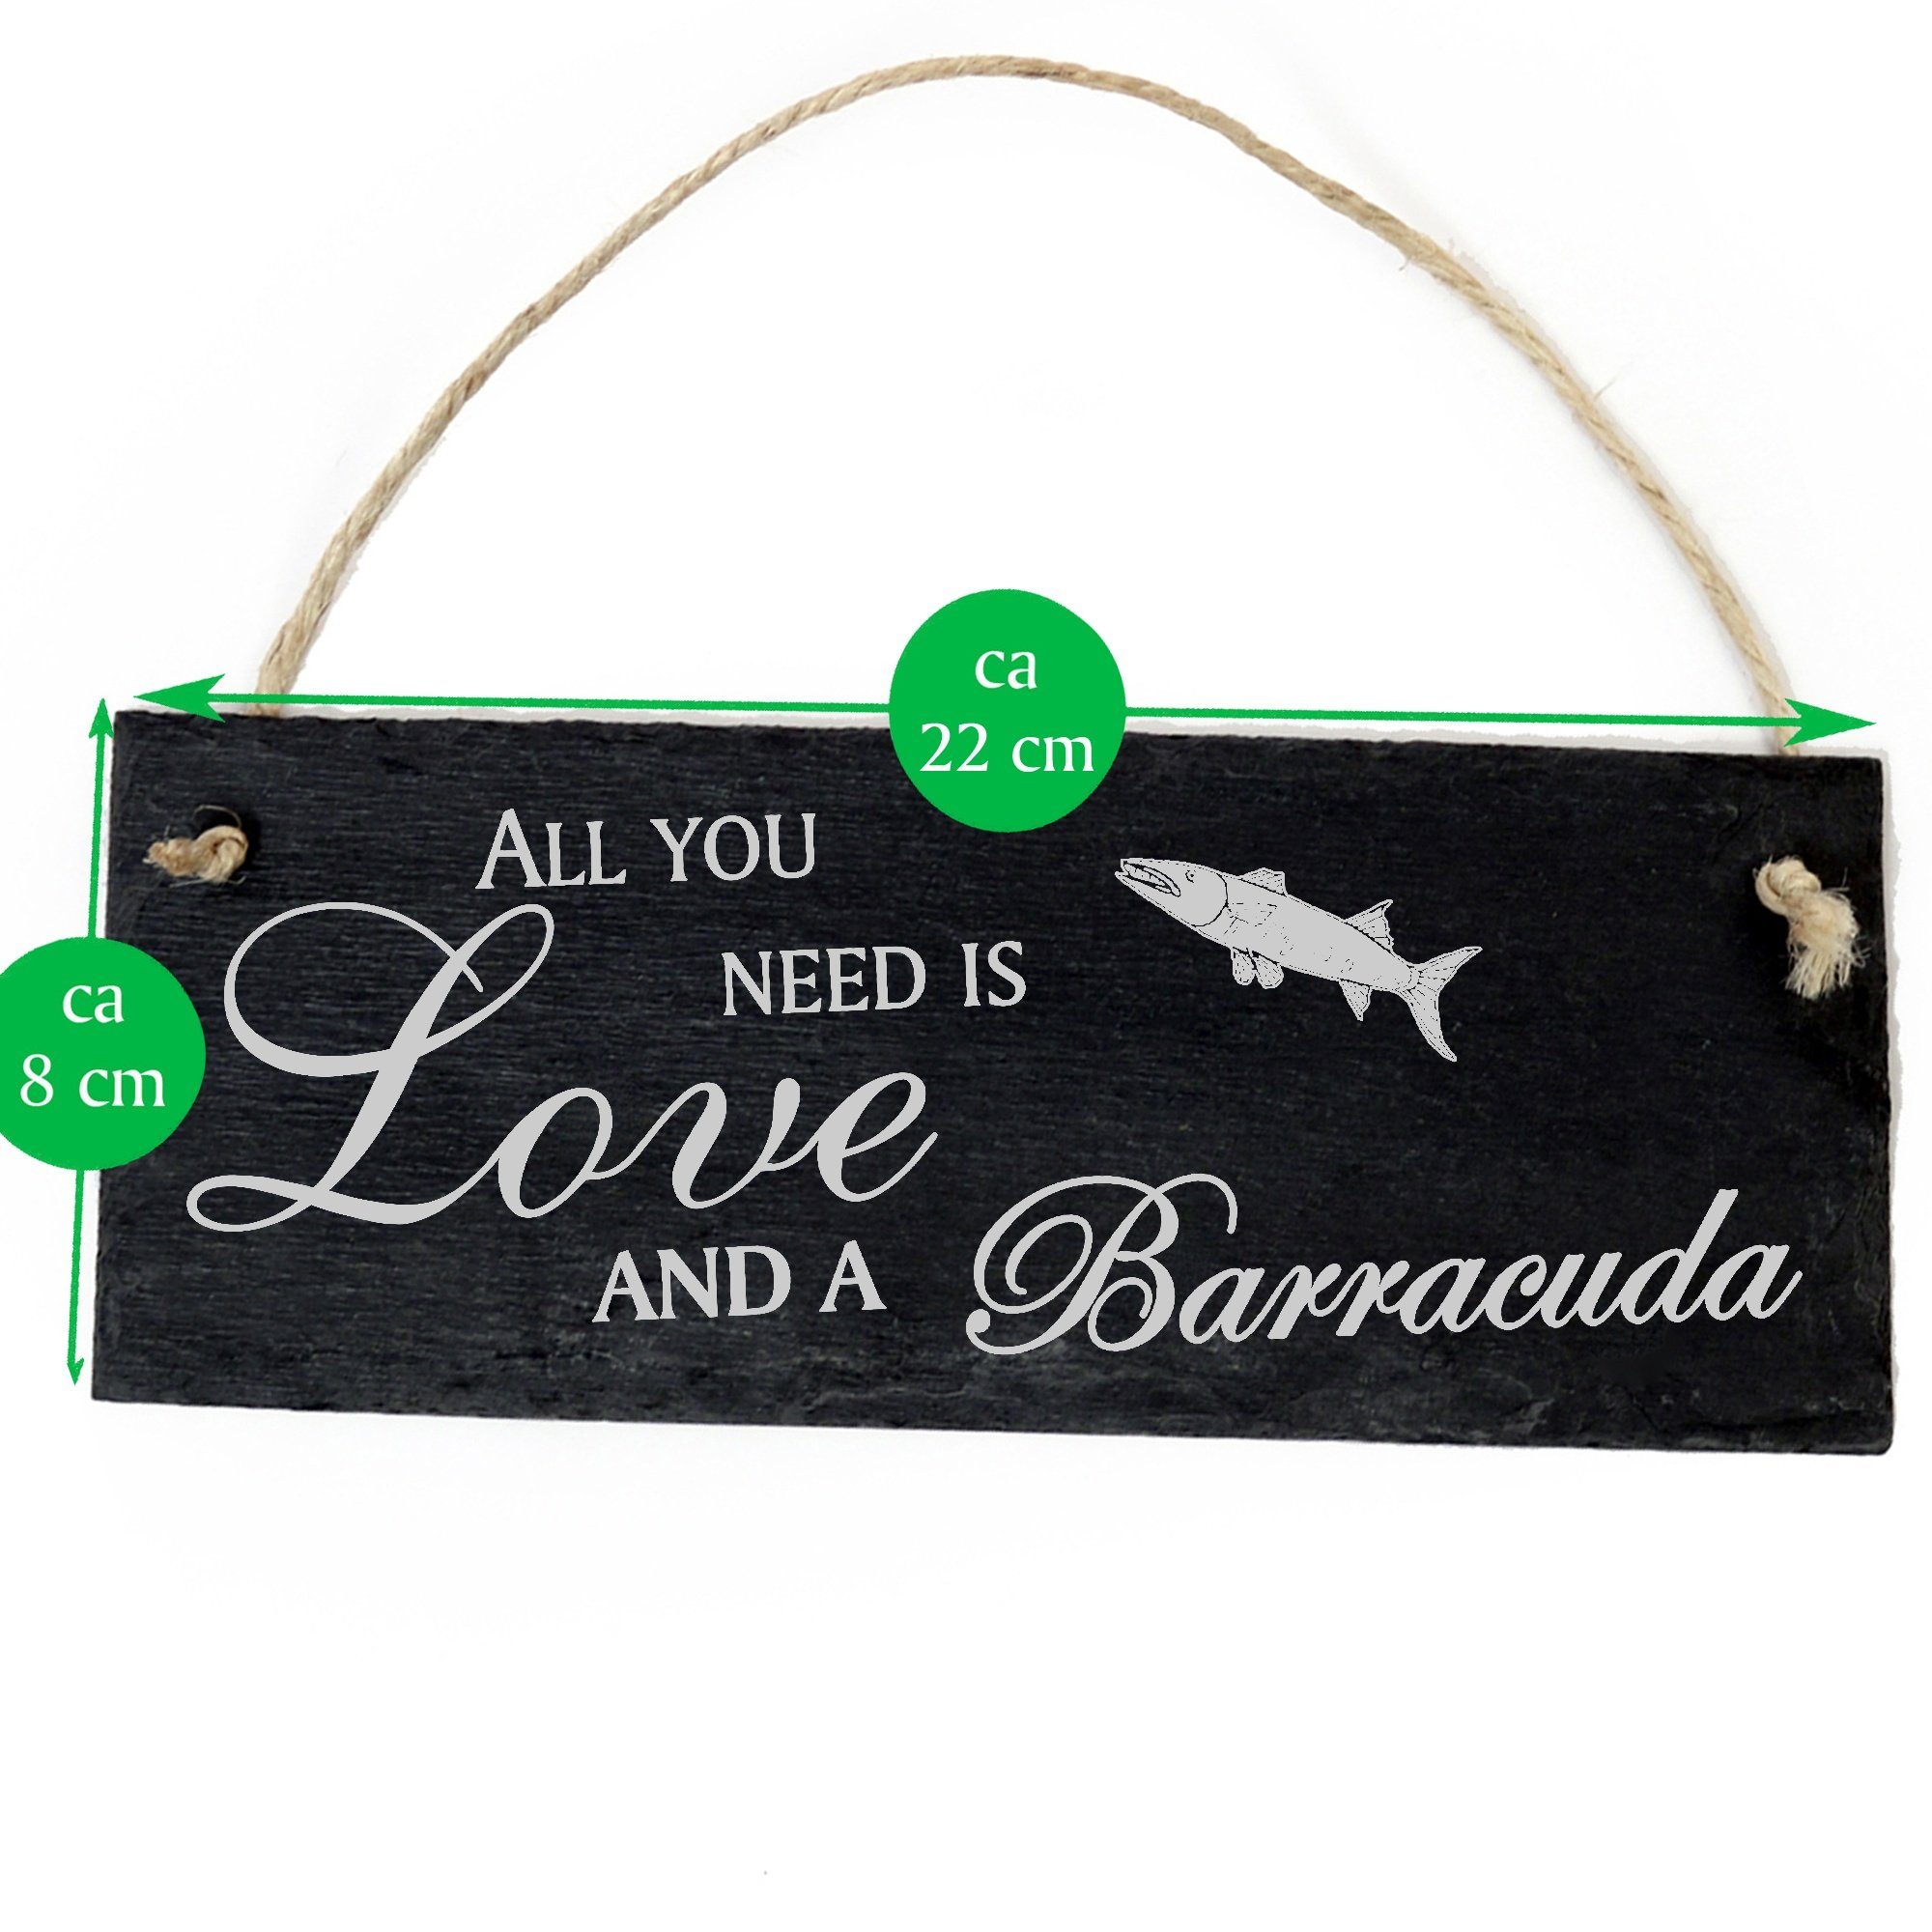 you a Love Barracuda Hängedekoration and All Dekolando is Barakuda need 22x8cm